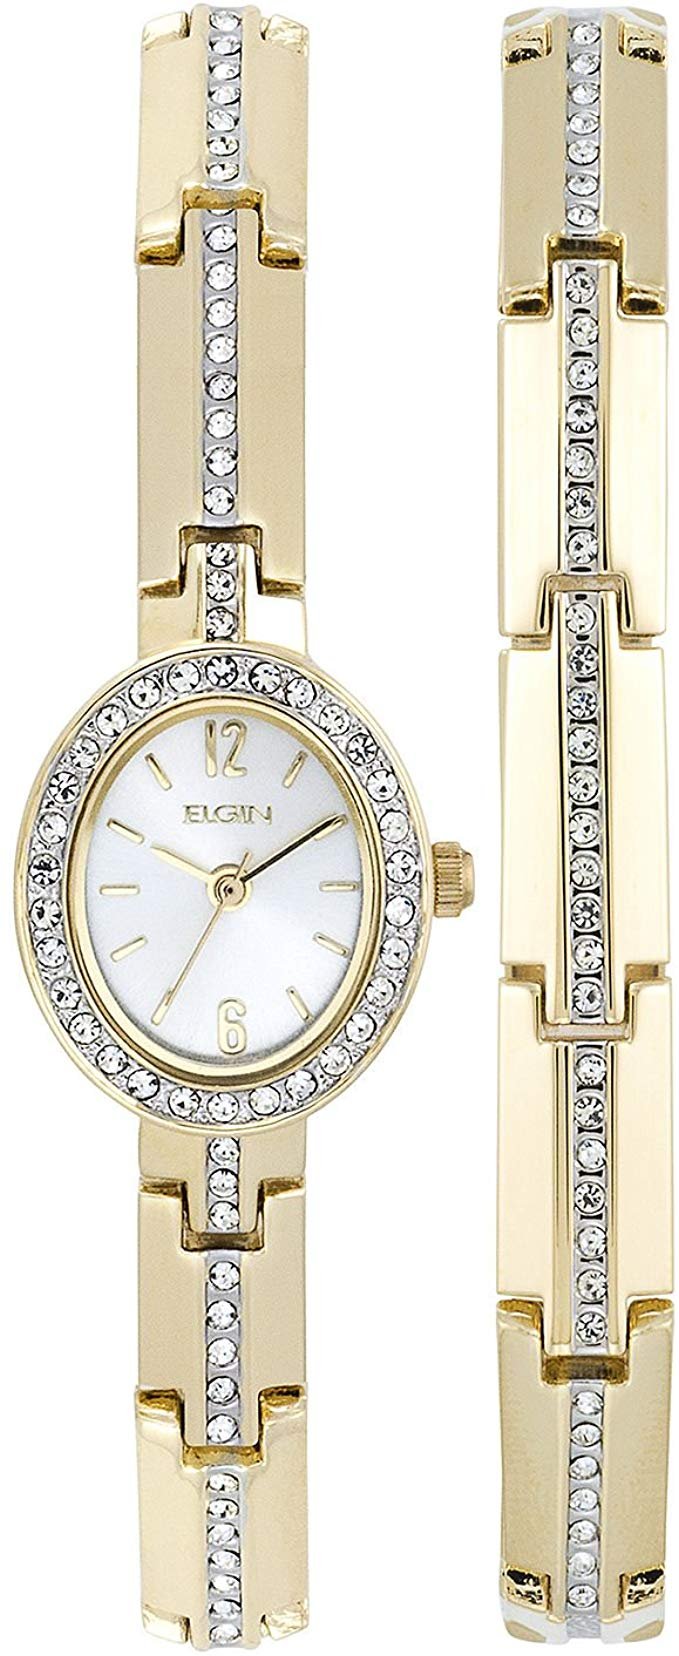 Model: Women's Elgin Crystal Accented Dress Watch and Bracelet Set